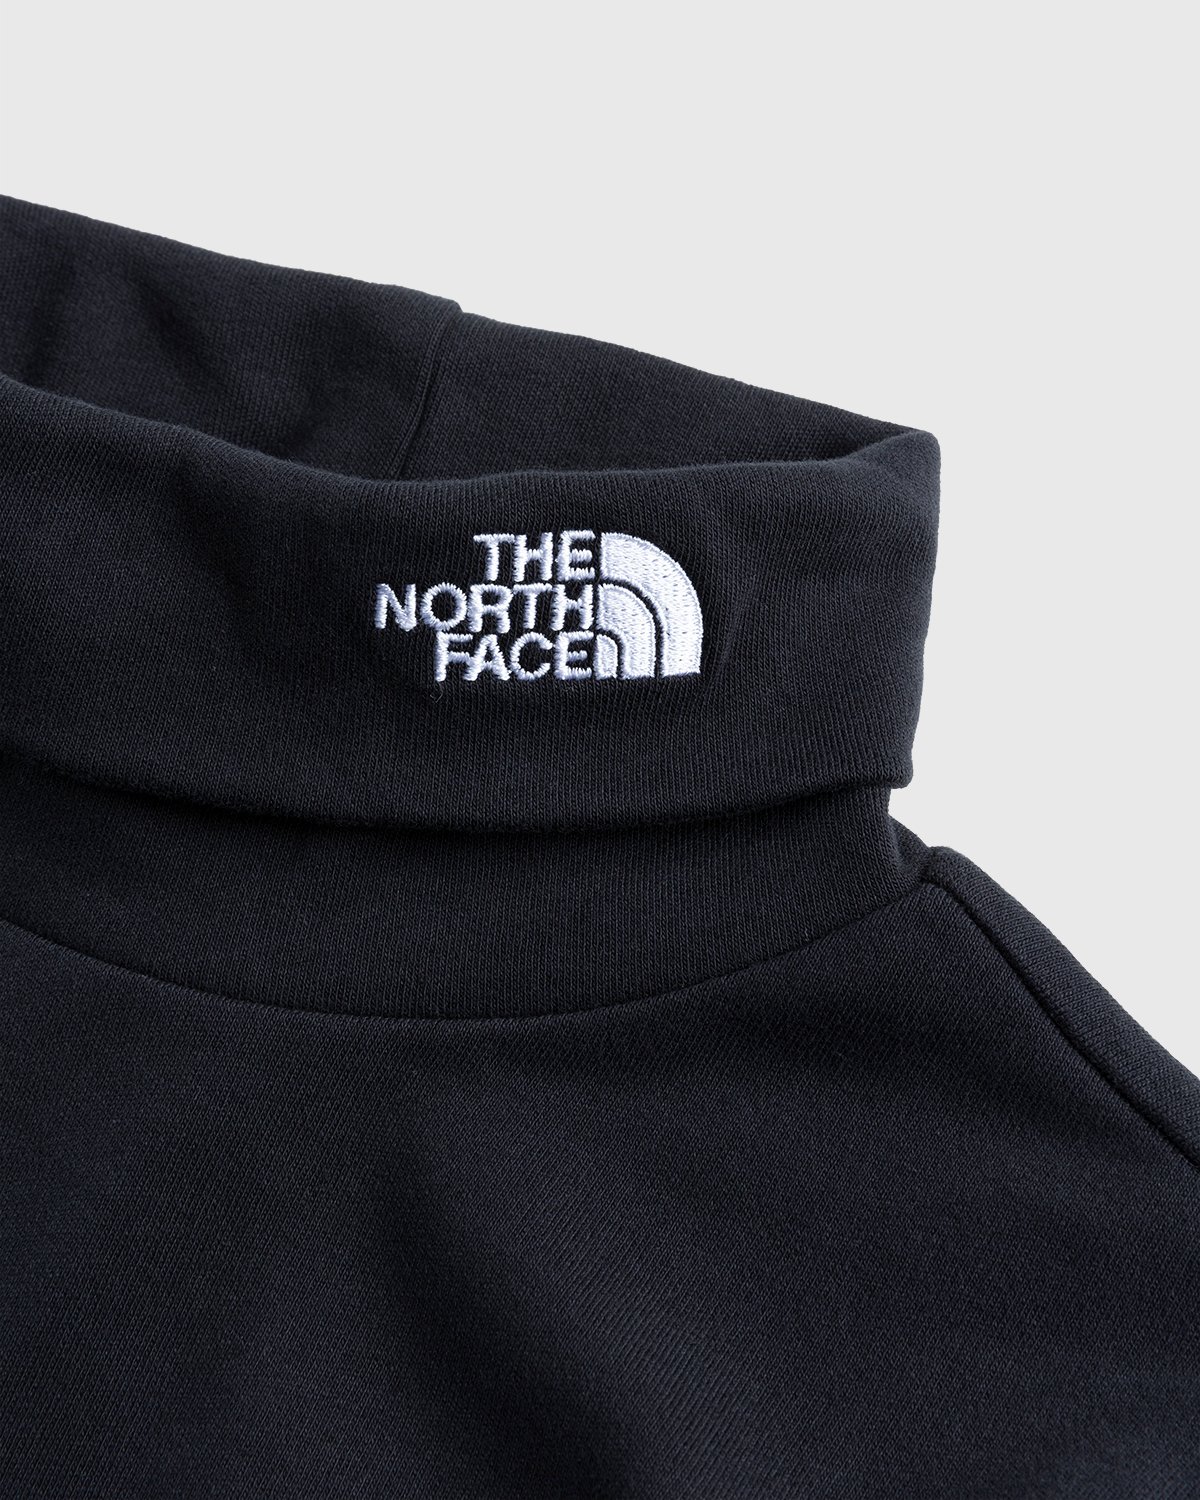 The North Face - Longsleeve Black - Clothing - Black - Image 3